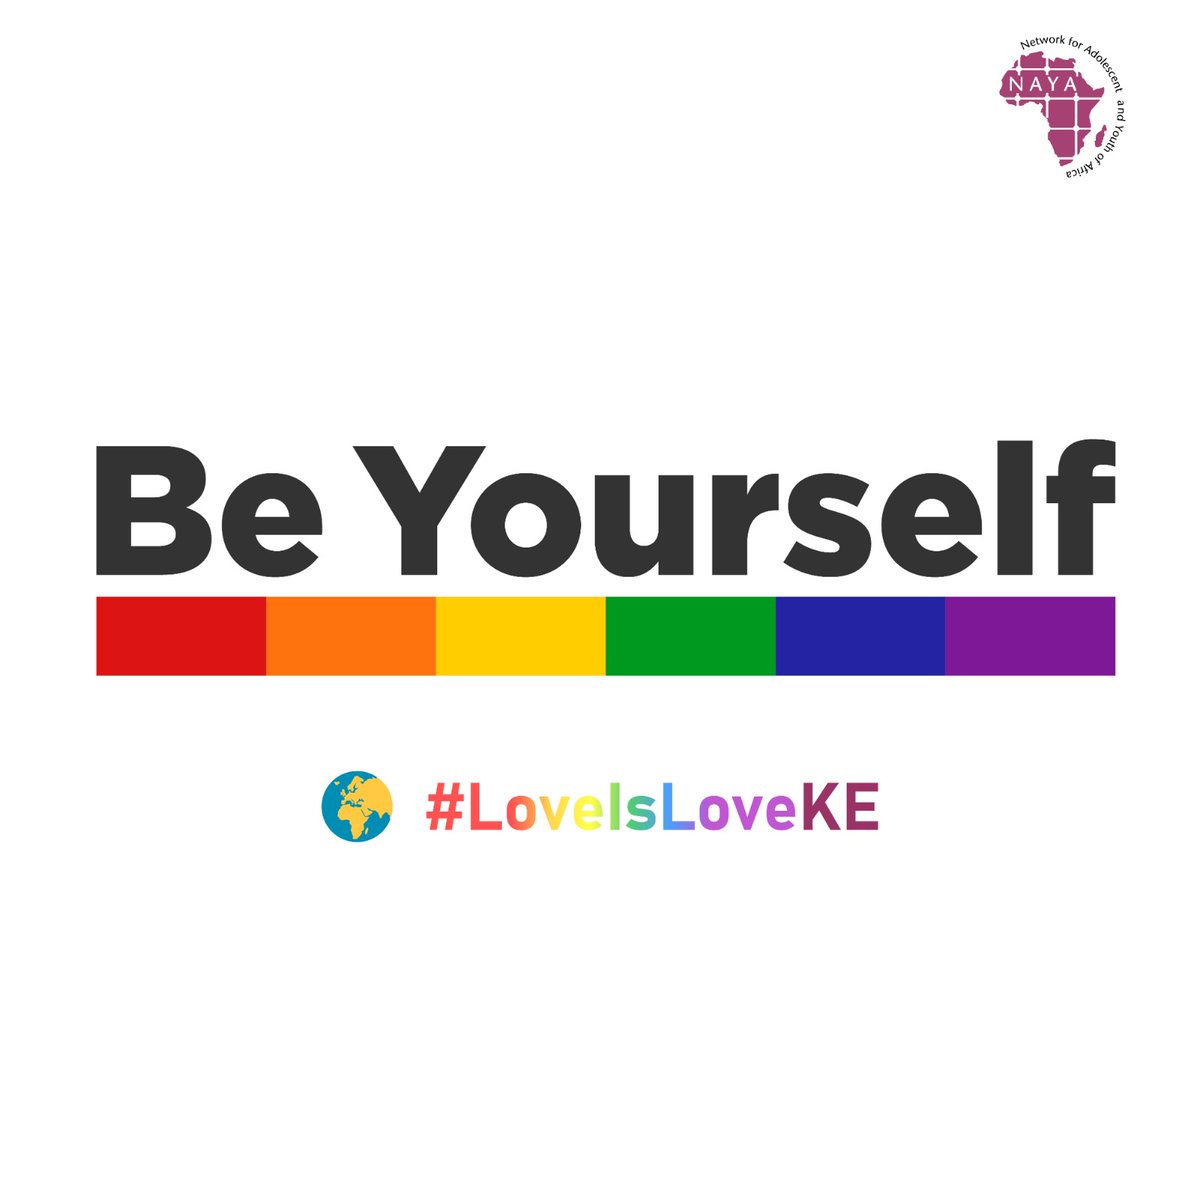 Let's learn to respect each other's boundaries and choices.
#LoveIsLoveKE
#IDAHOBIT
@NAYAKenya
@RHRNKenya
@Galck_ke